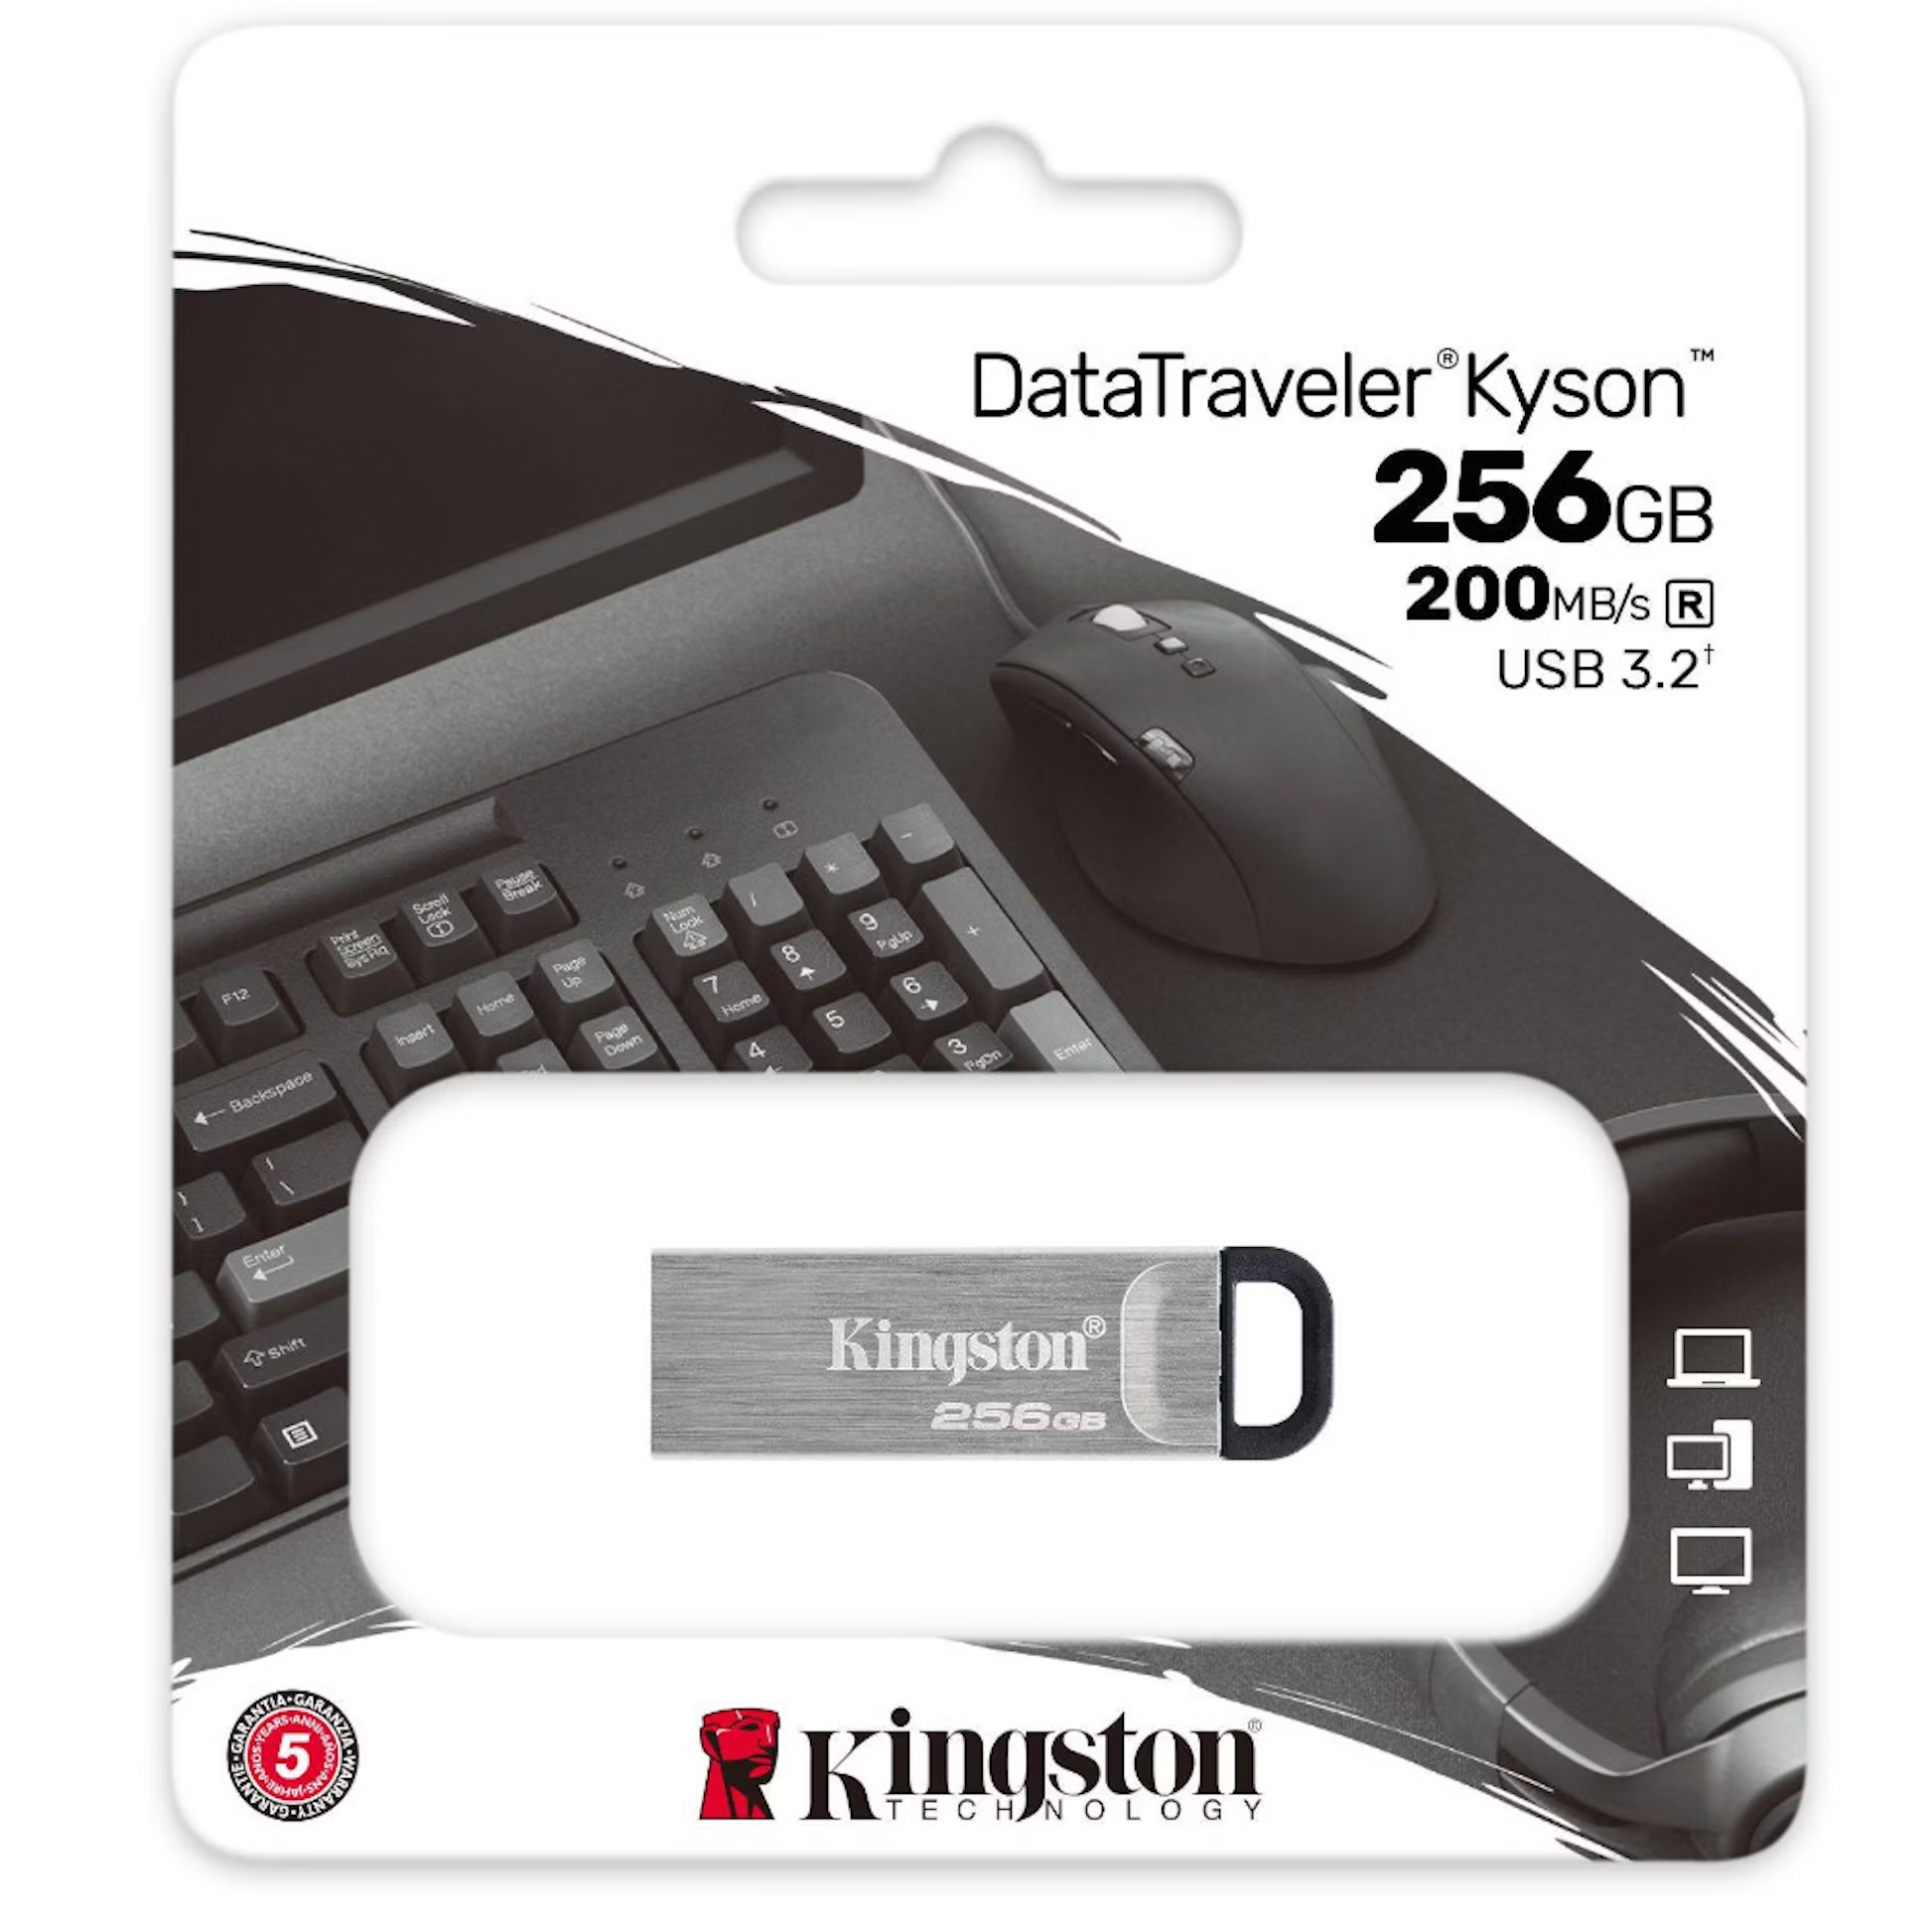 USB-A Flash Drive 256GB Kingston DataTraveler Kyson - Albagame